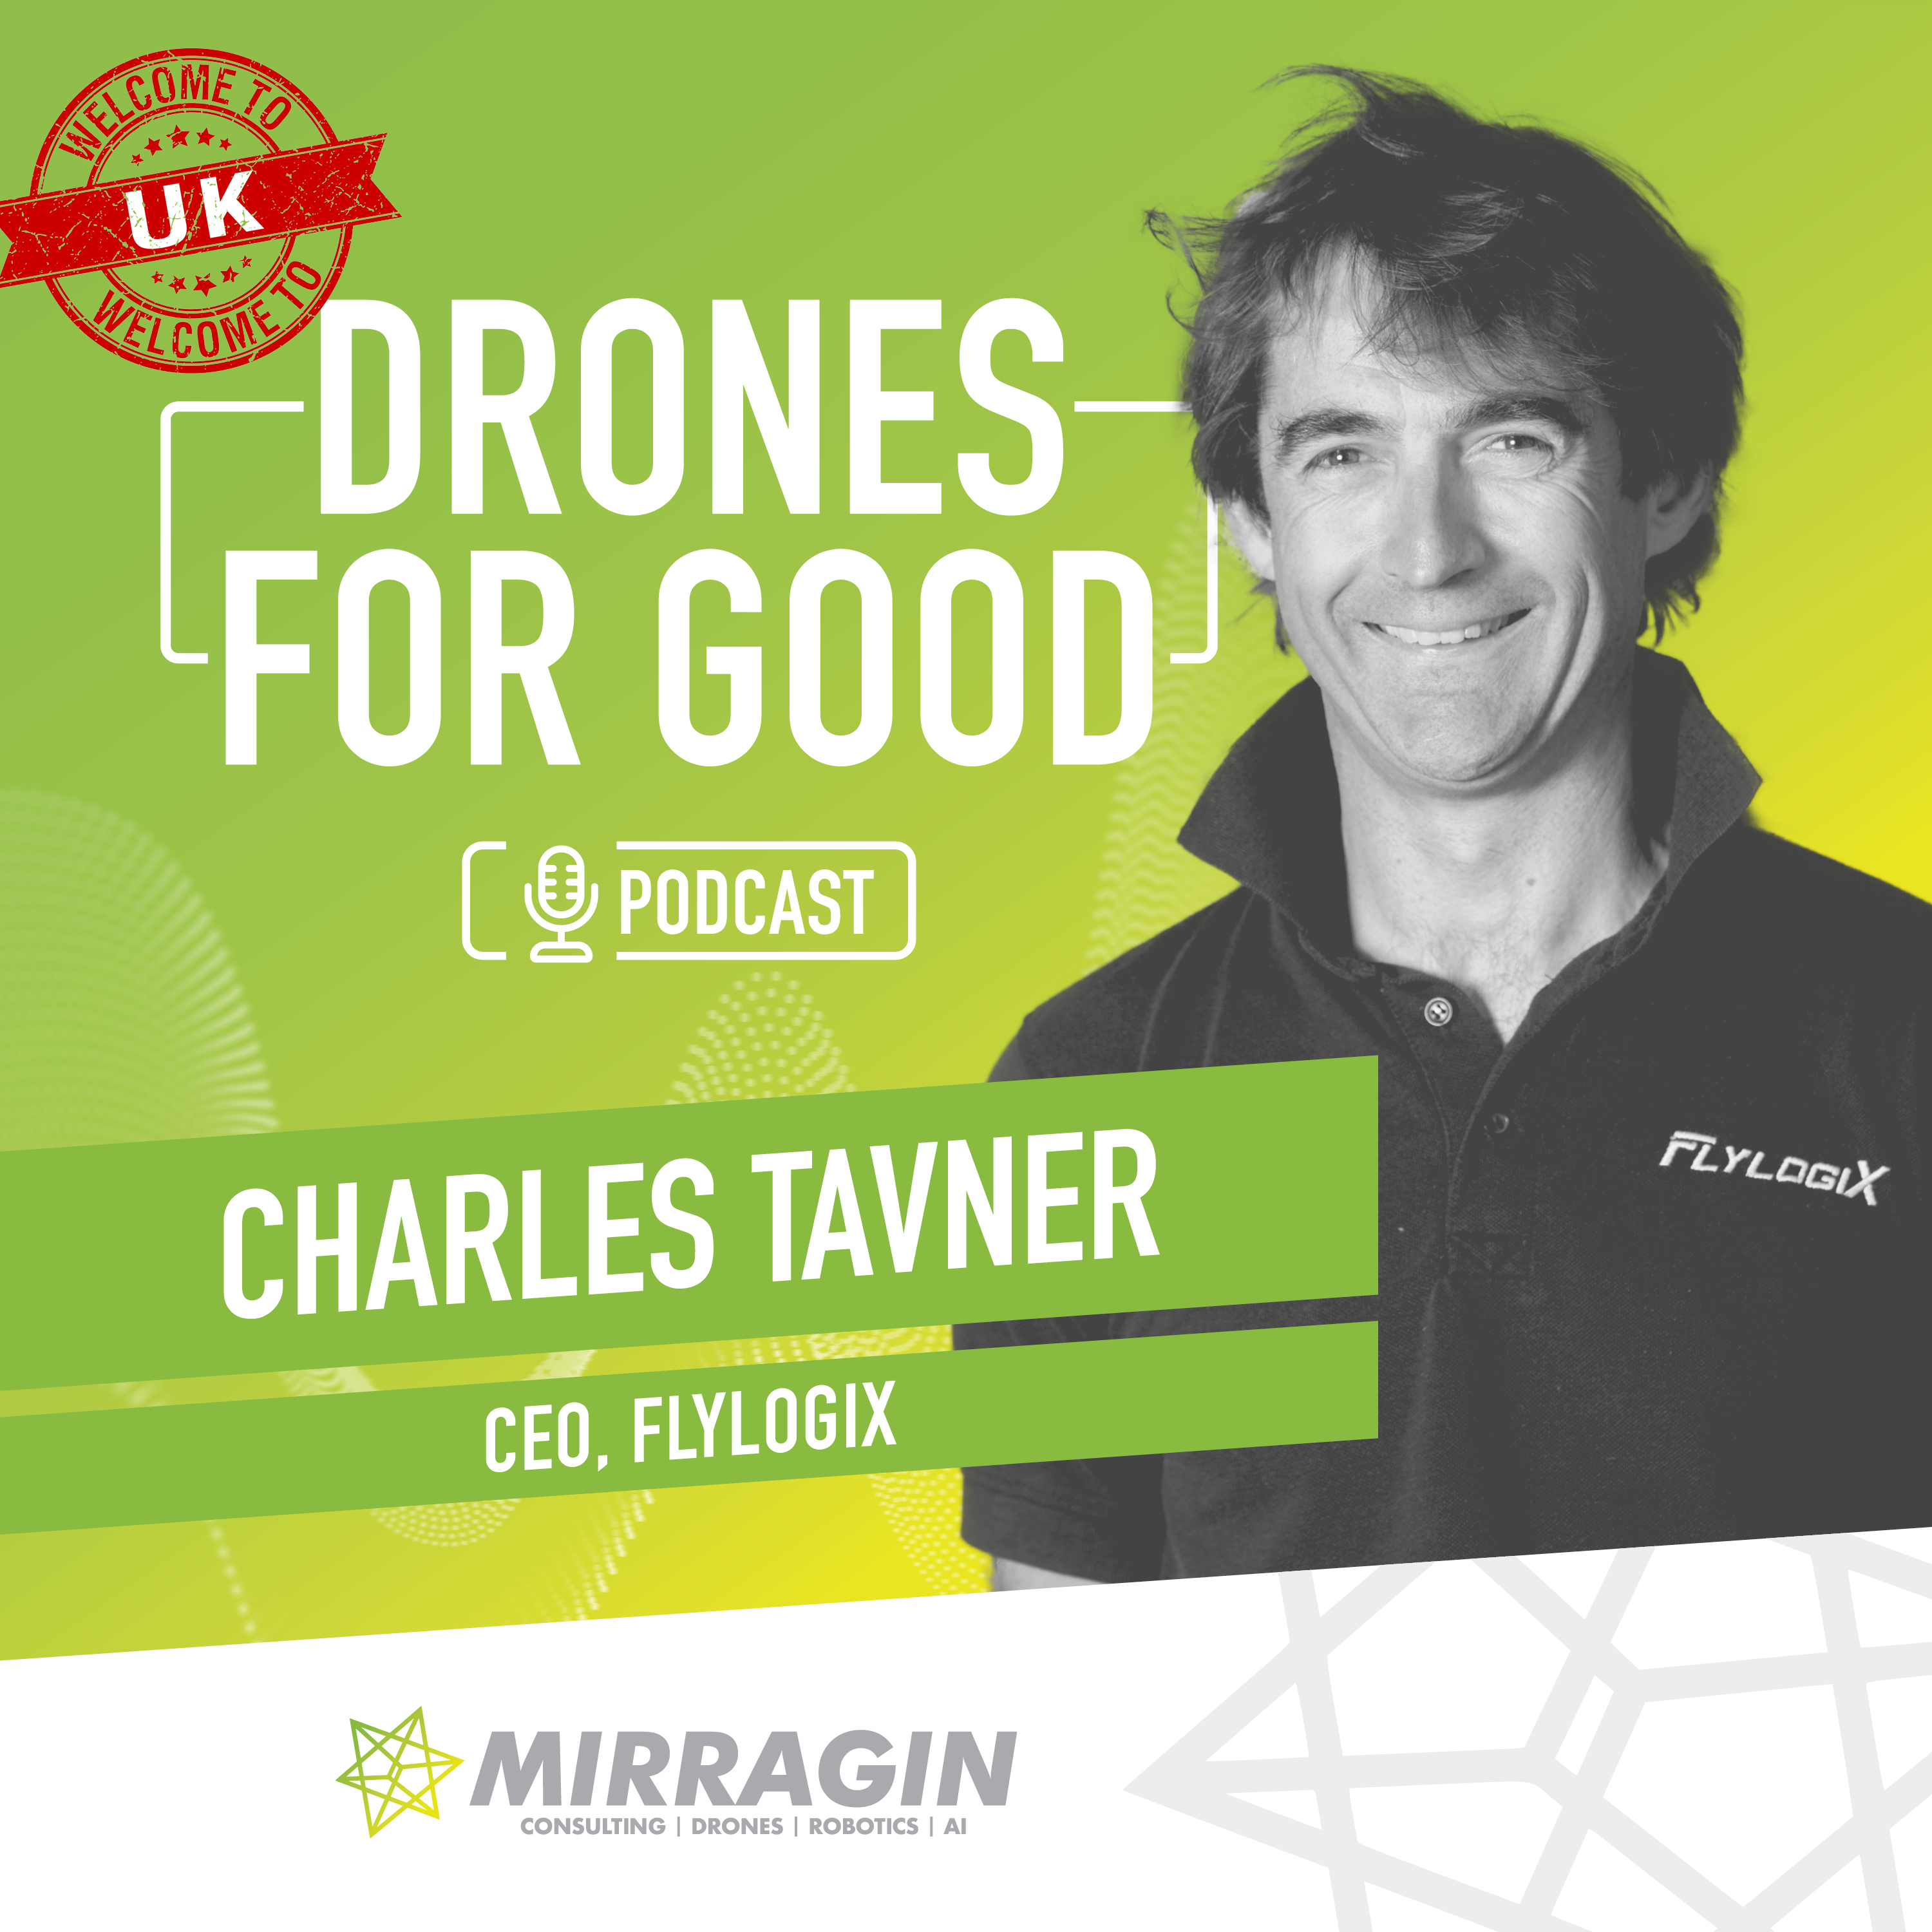 Charles Tavner - CEO, Flylogix